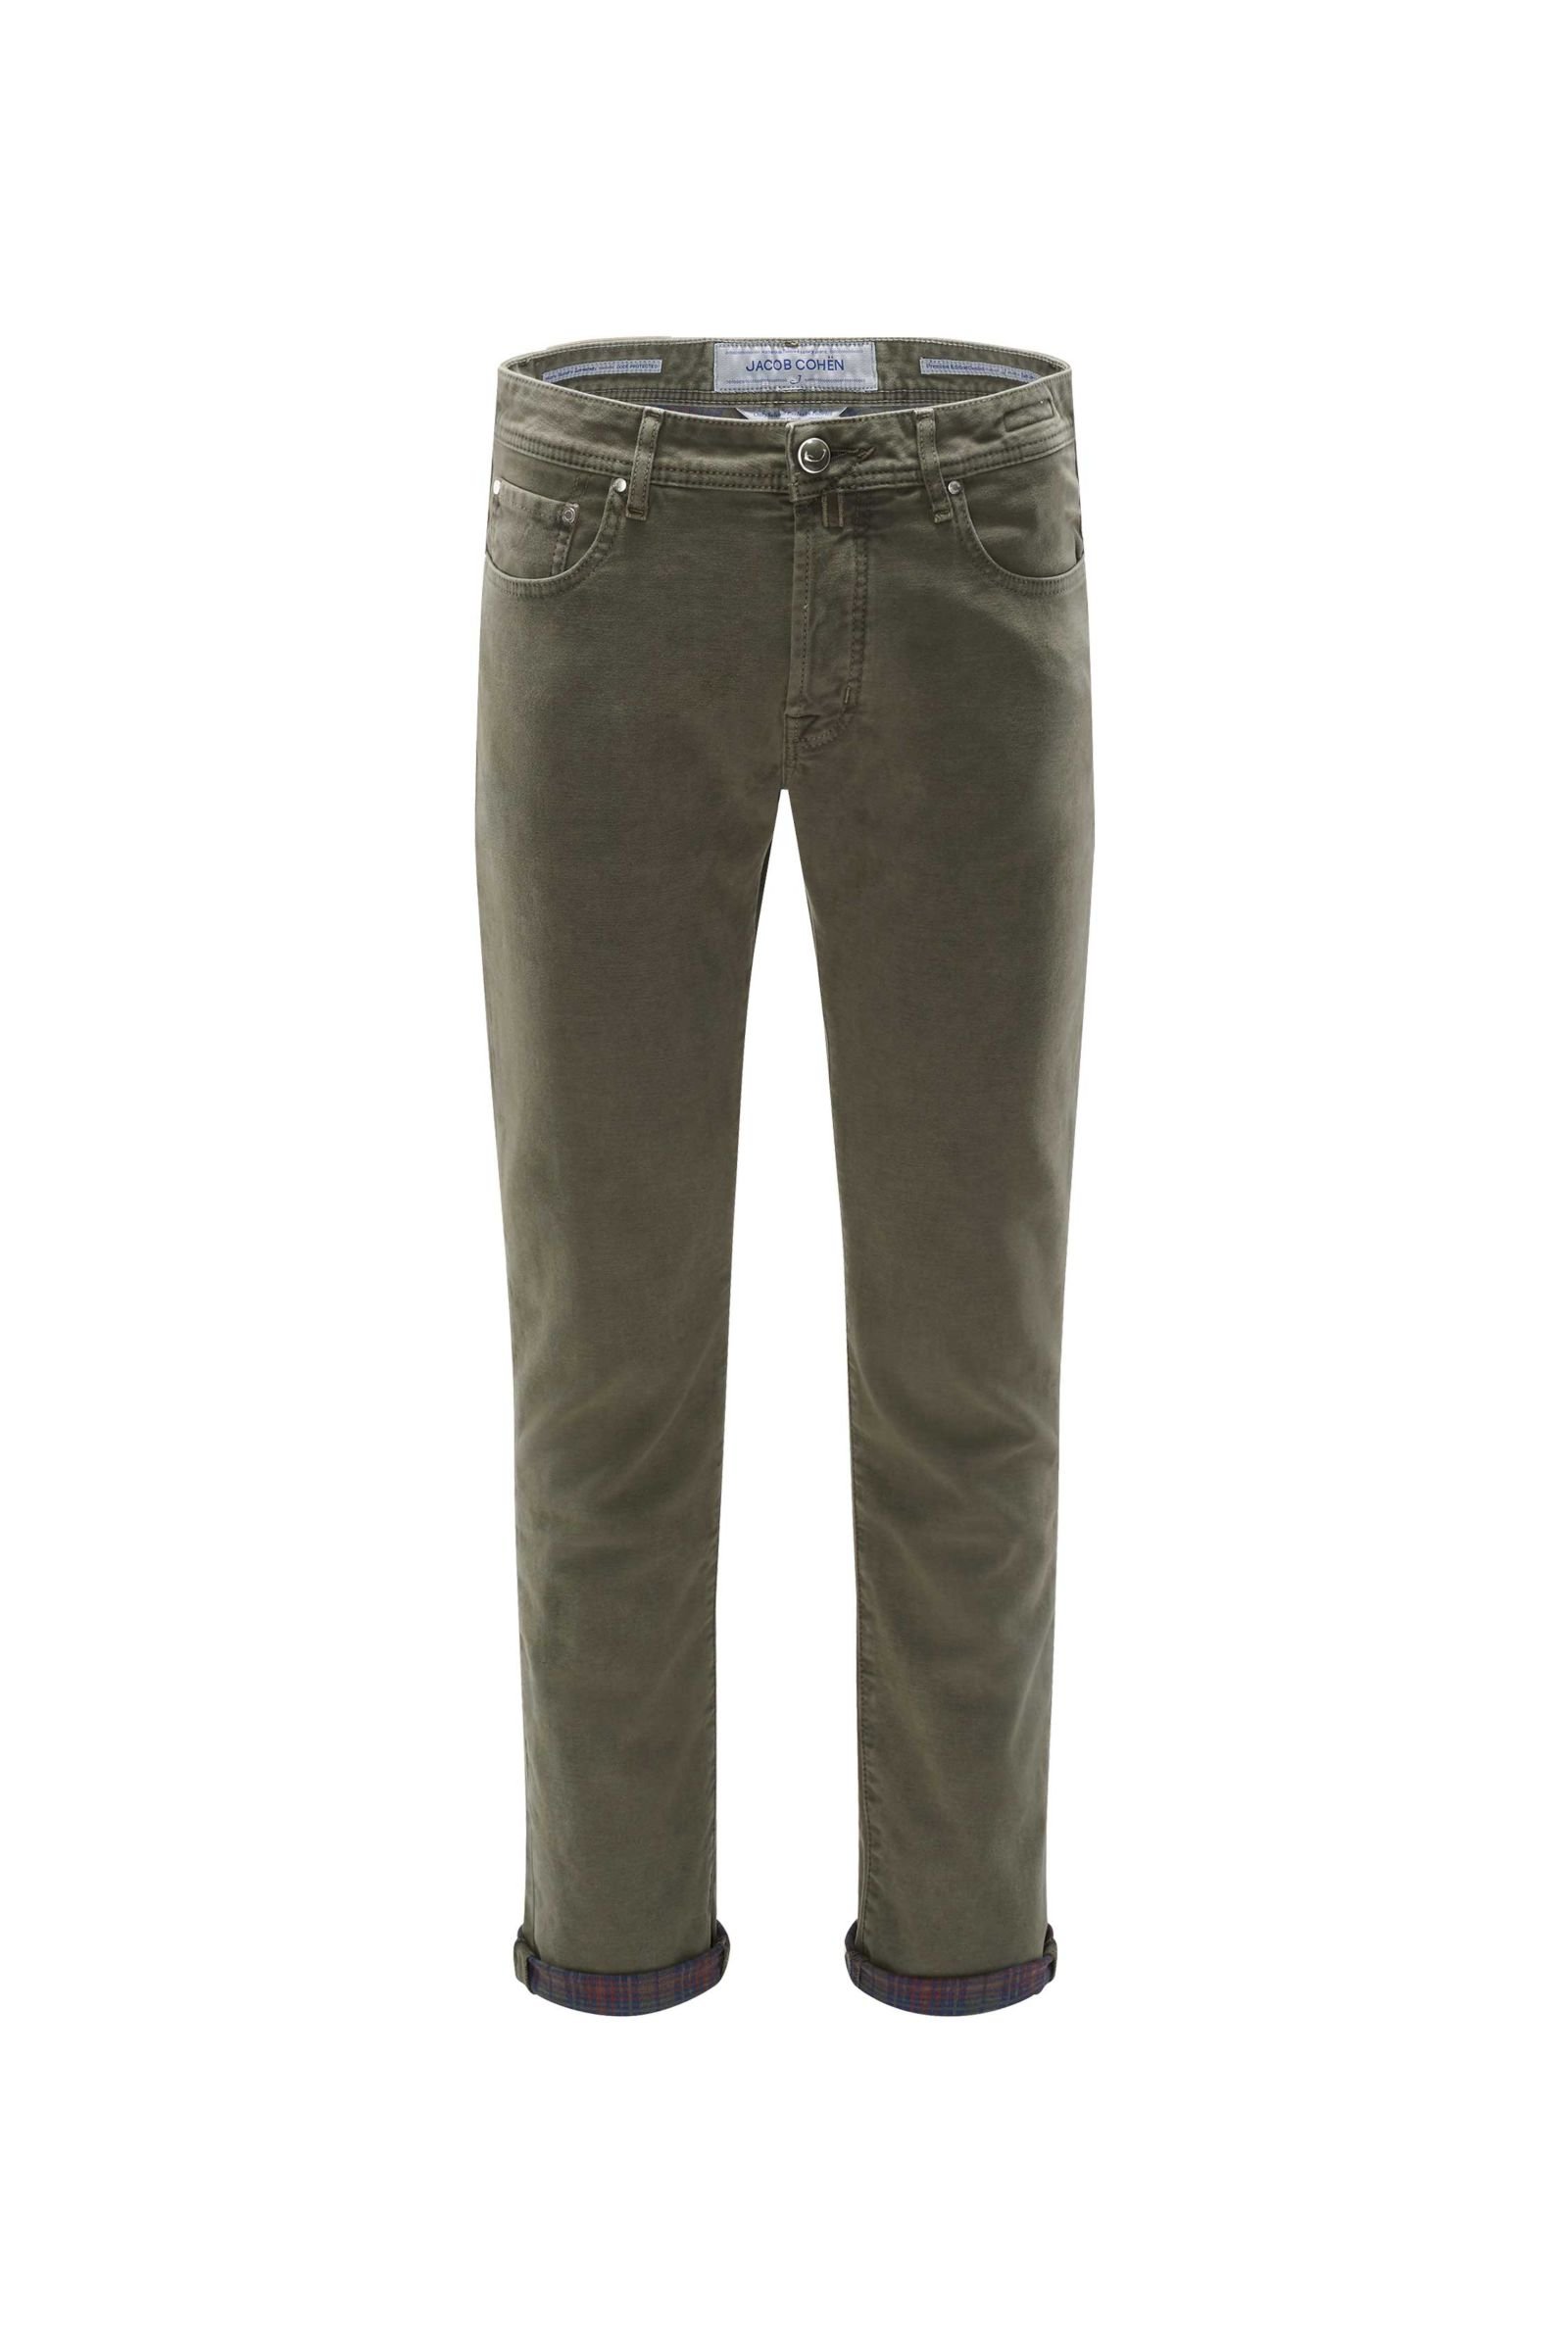 Fustian trousers 'J688 Comfort Slim Fit' grey green